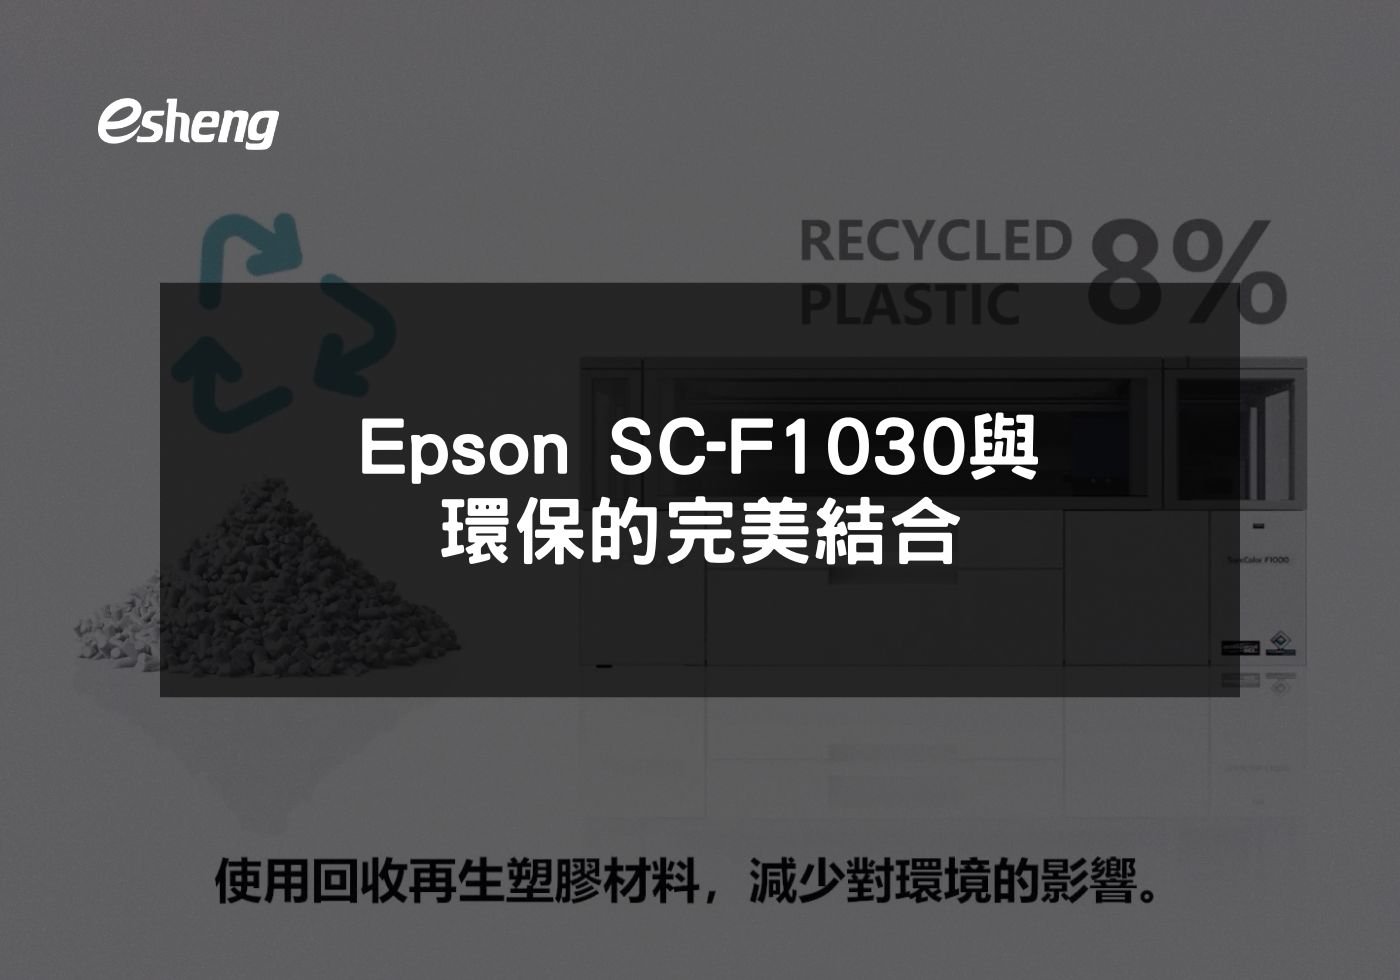 Epson SC-F1030與環保的完美結合